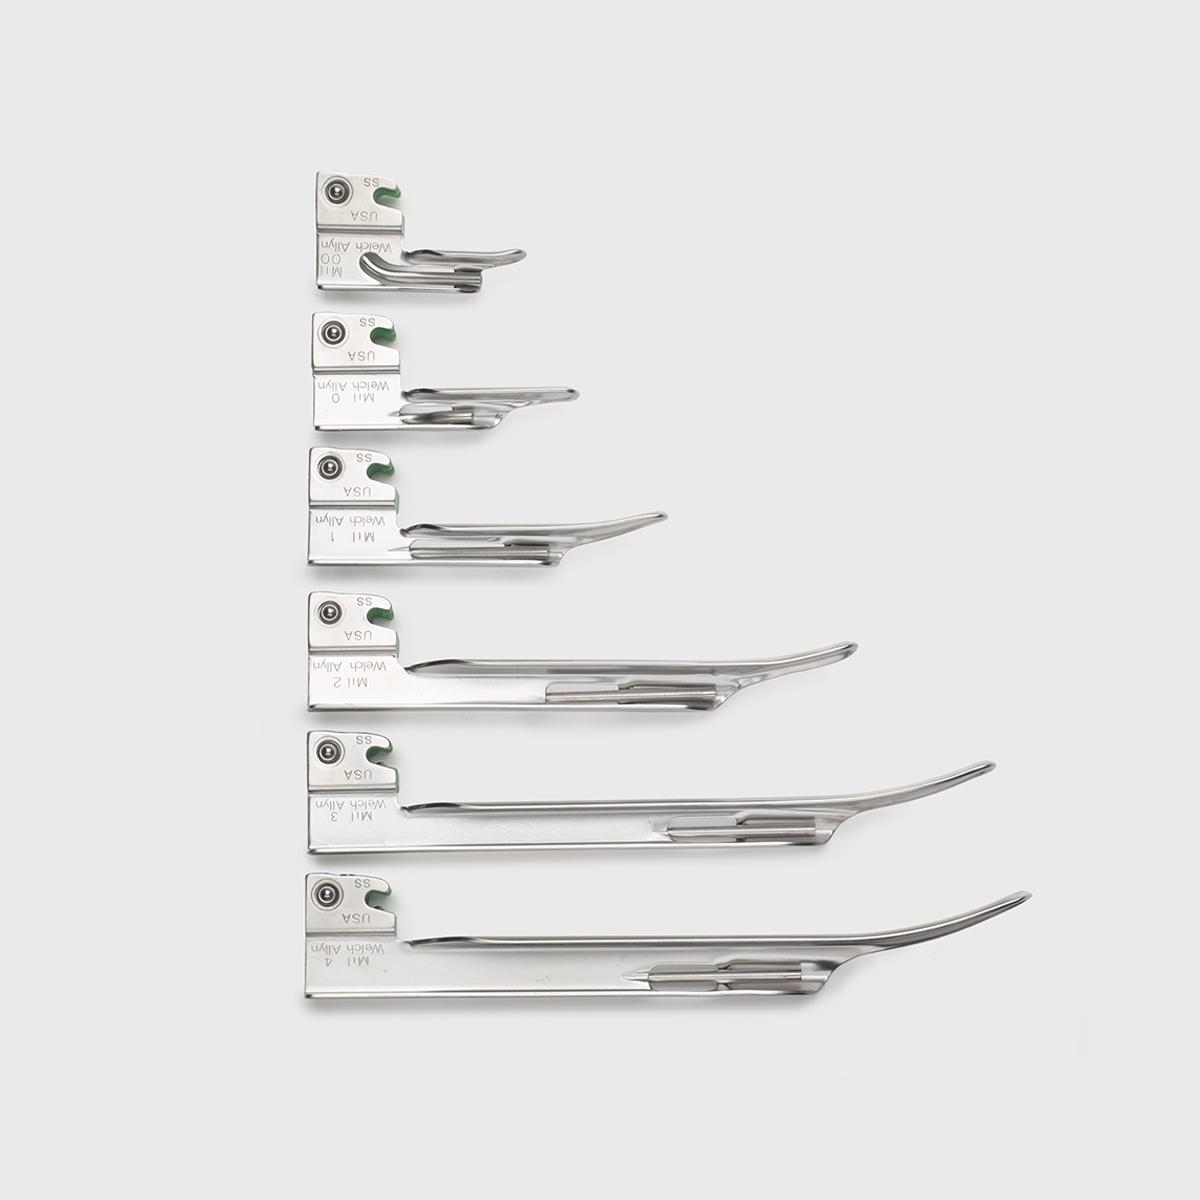 Six Welch Allyn Fiber-Optic Laryngoscope System Miller blades of various size.